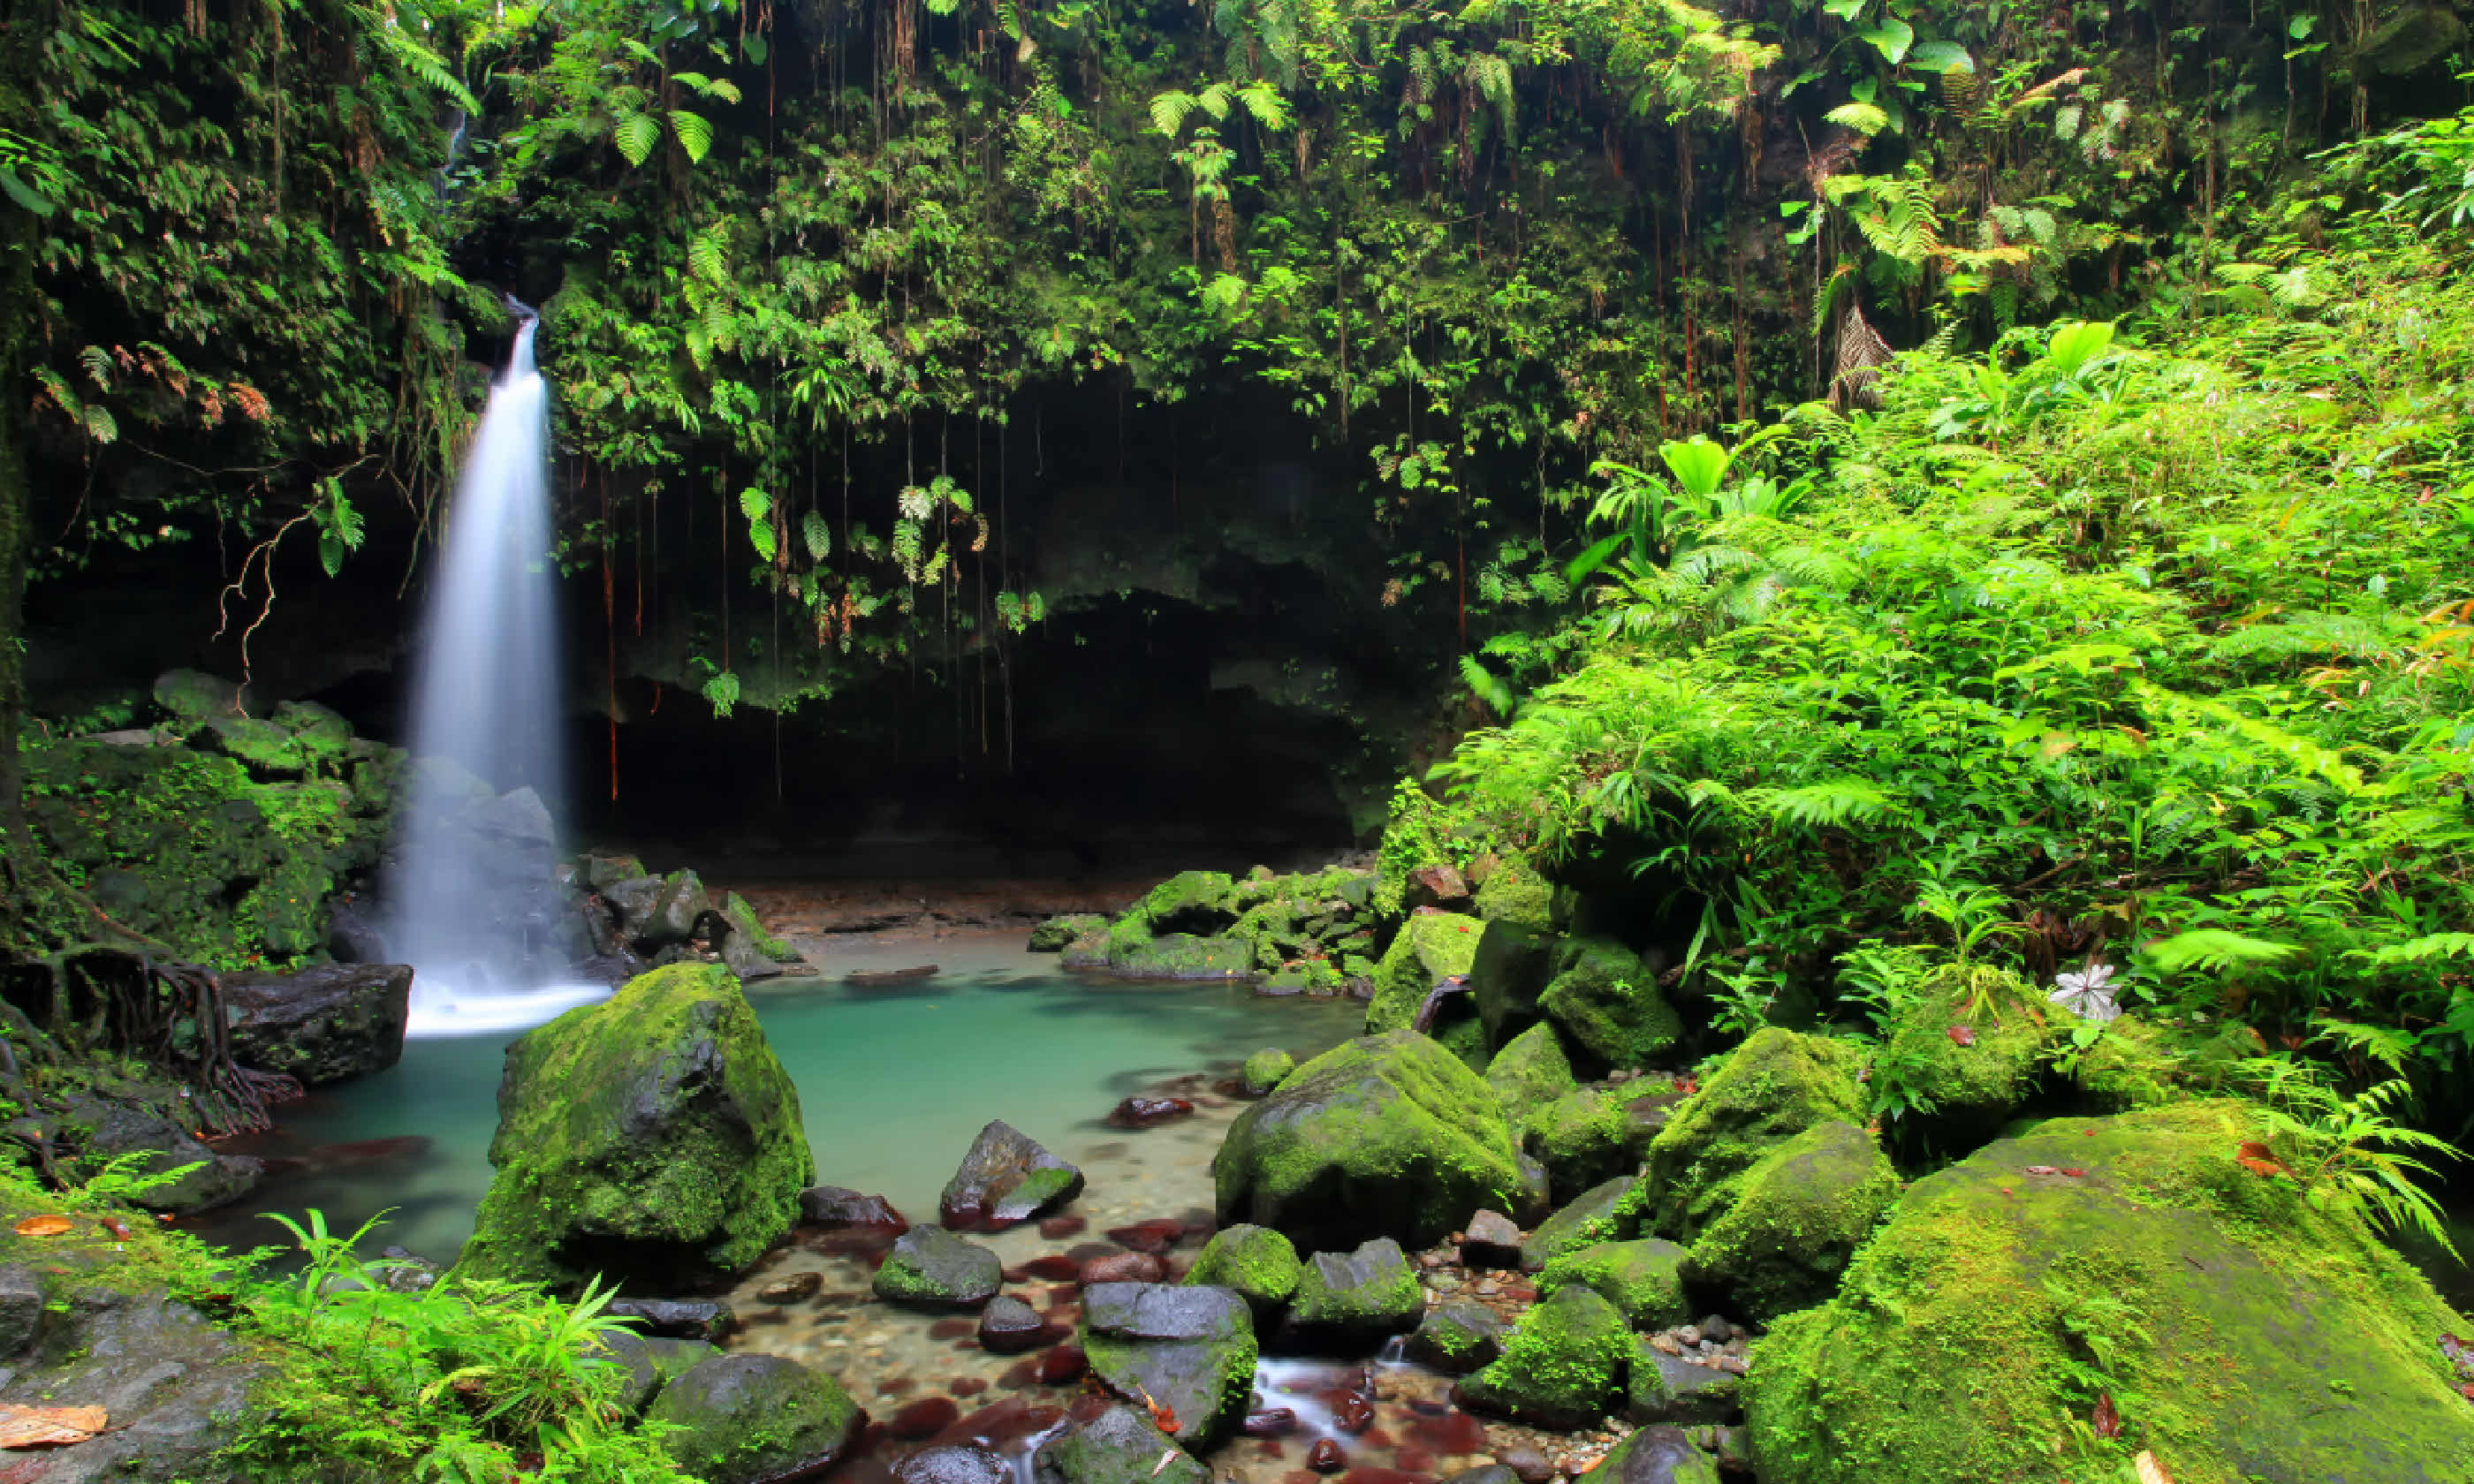 Emerald pool waterfall in Dominica (Shutterstock)